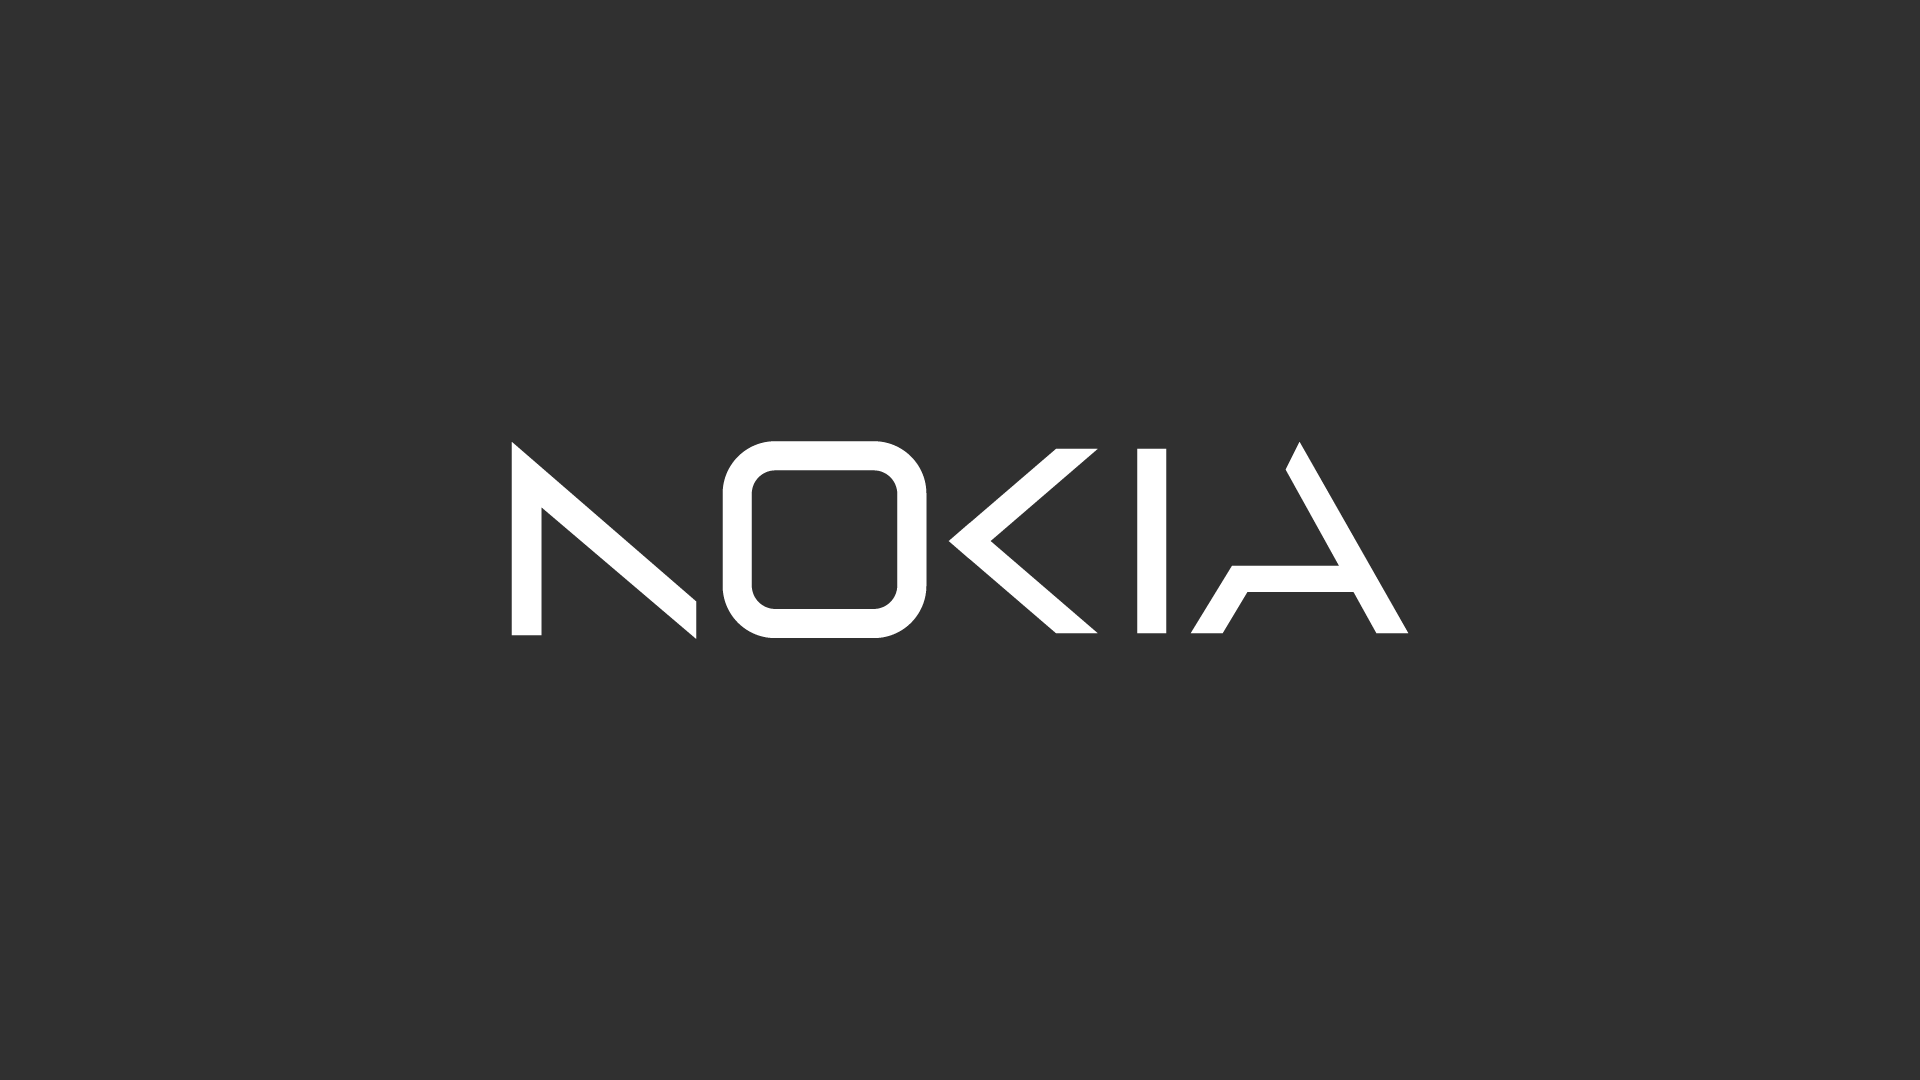 Nokia - Proposta de redesign branding design graphic design logo nokia proposal redesign vector